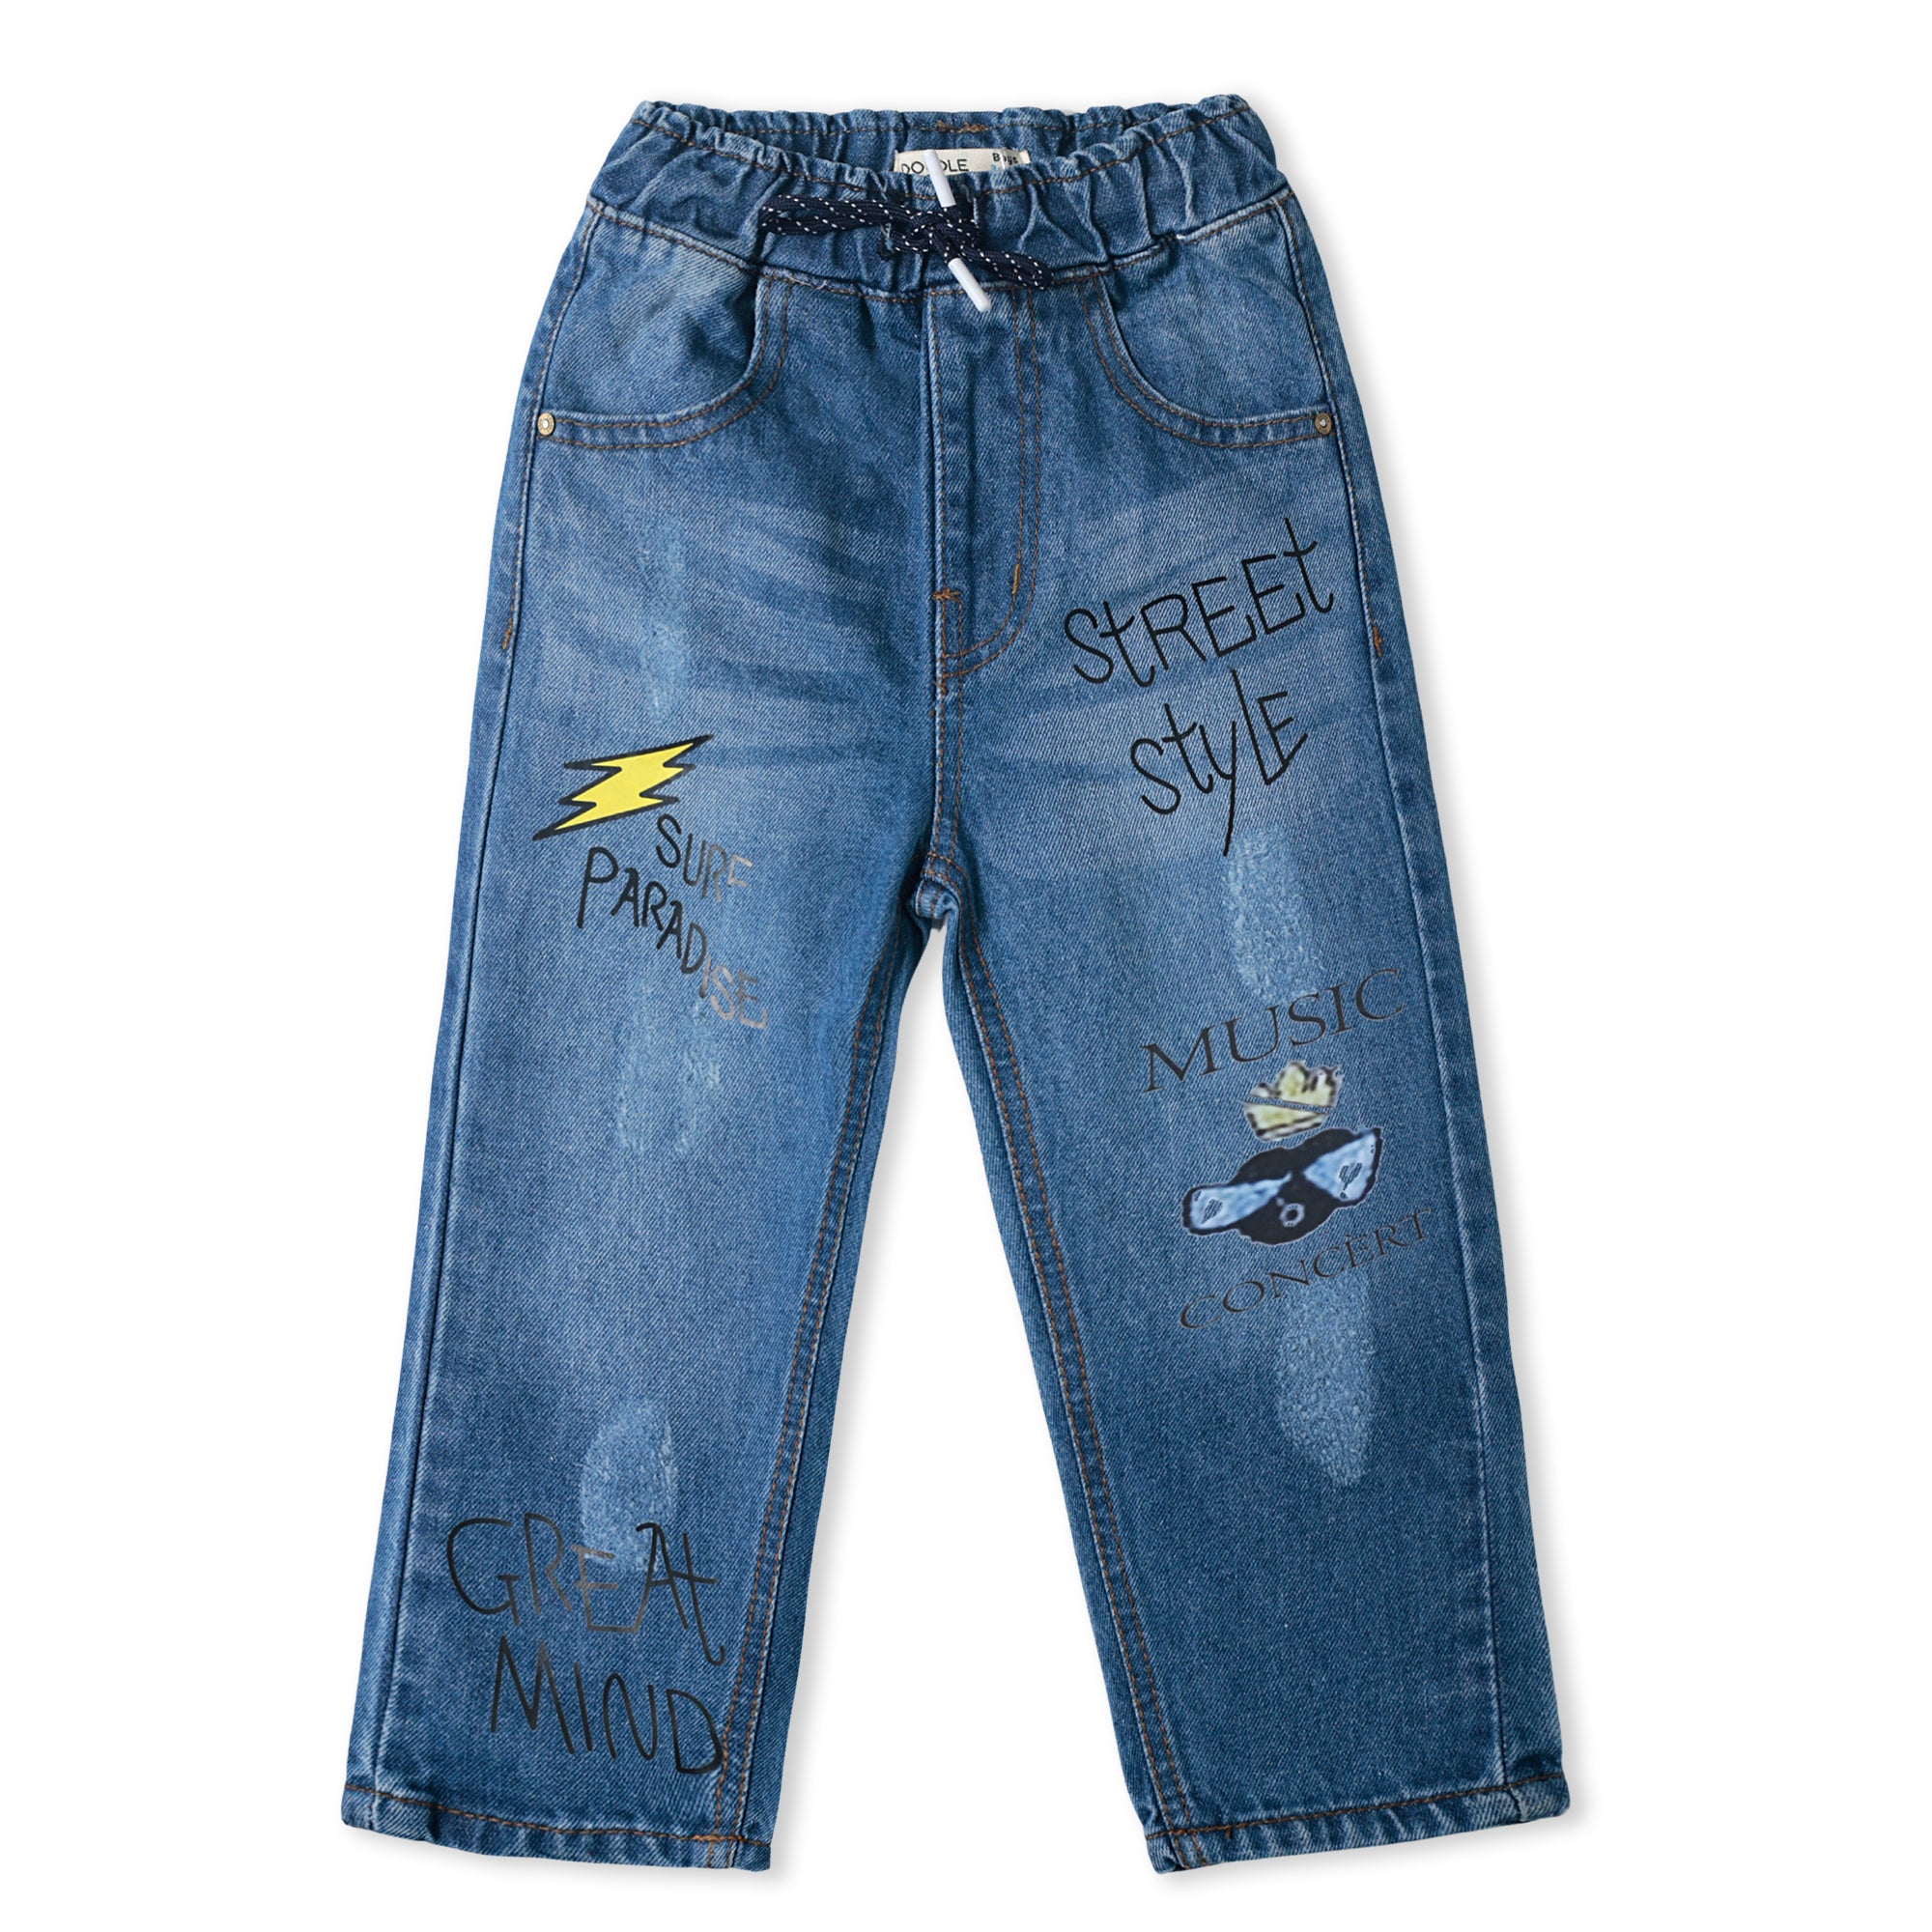 Street Art Denim Jeans